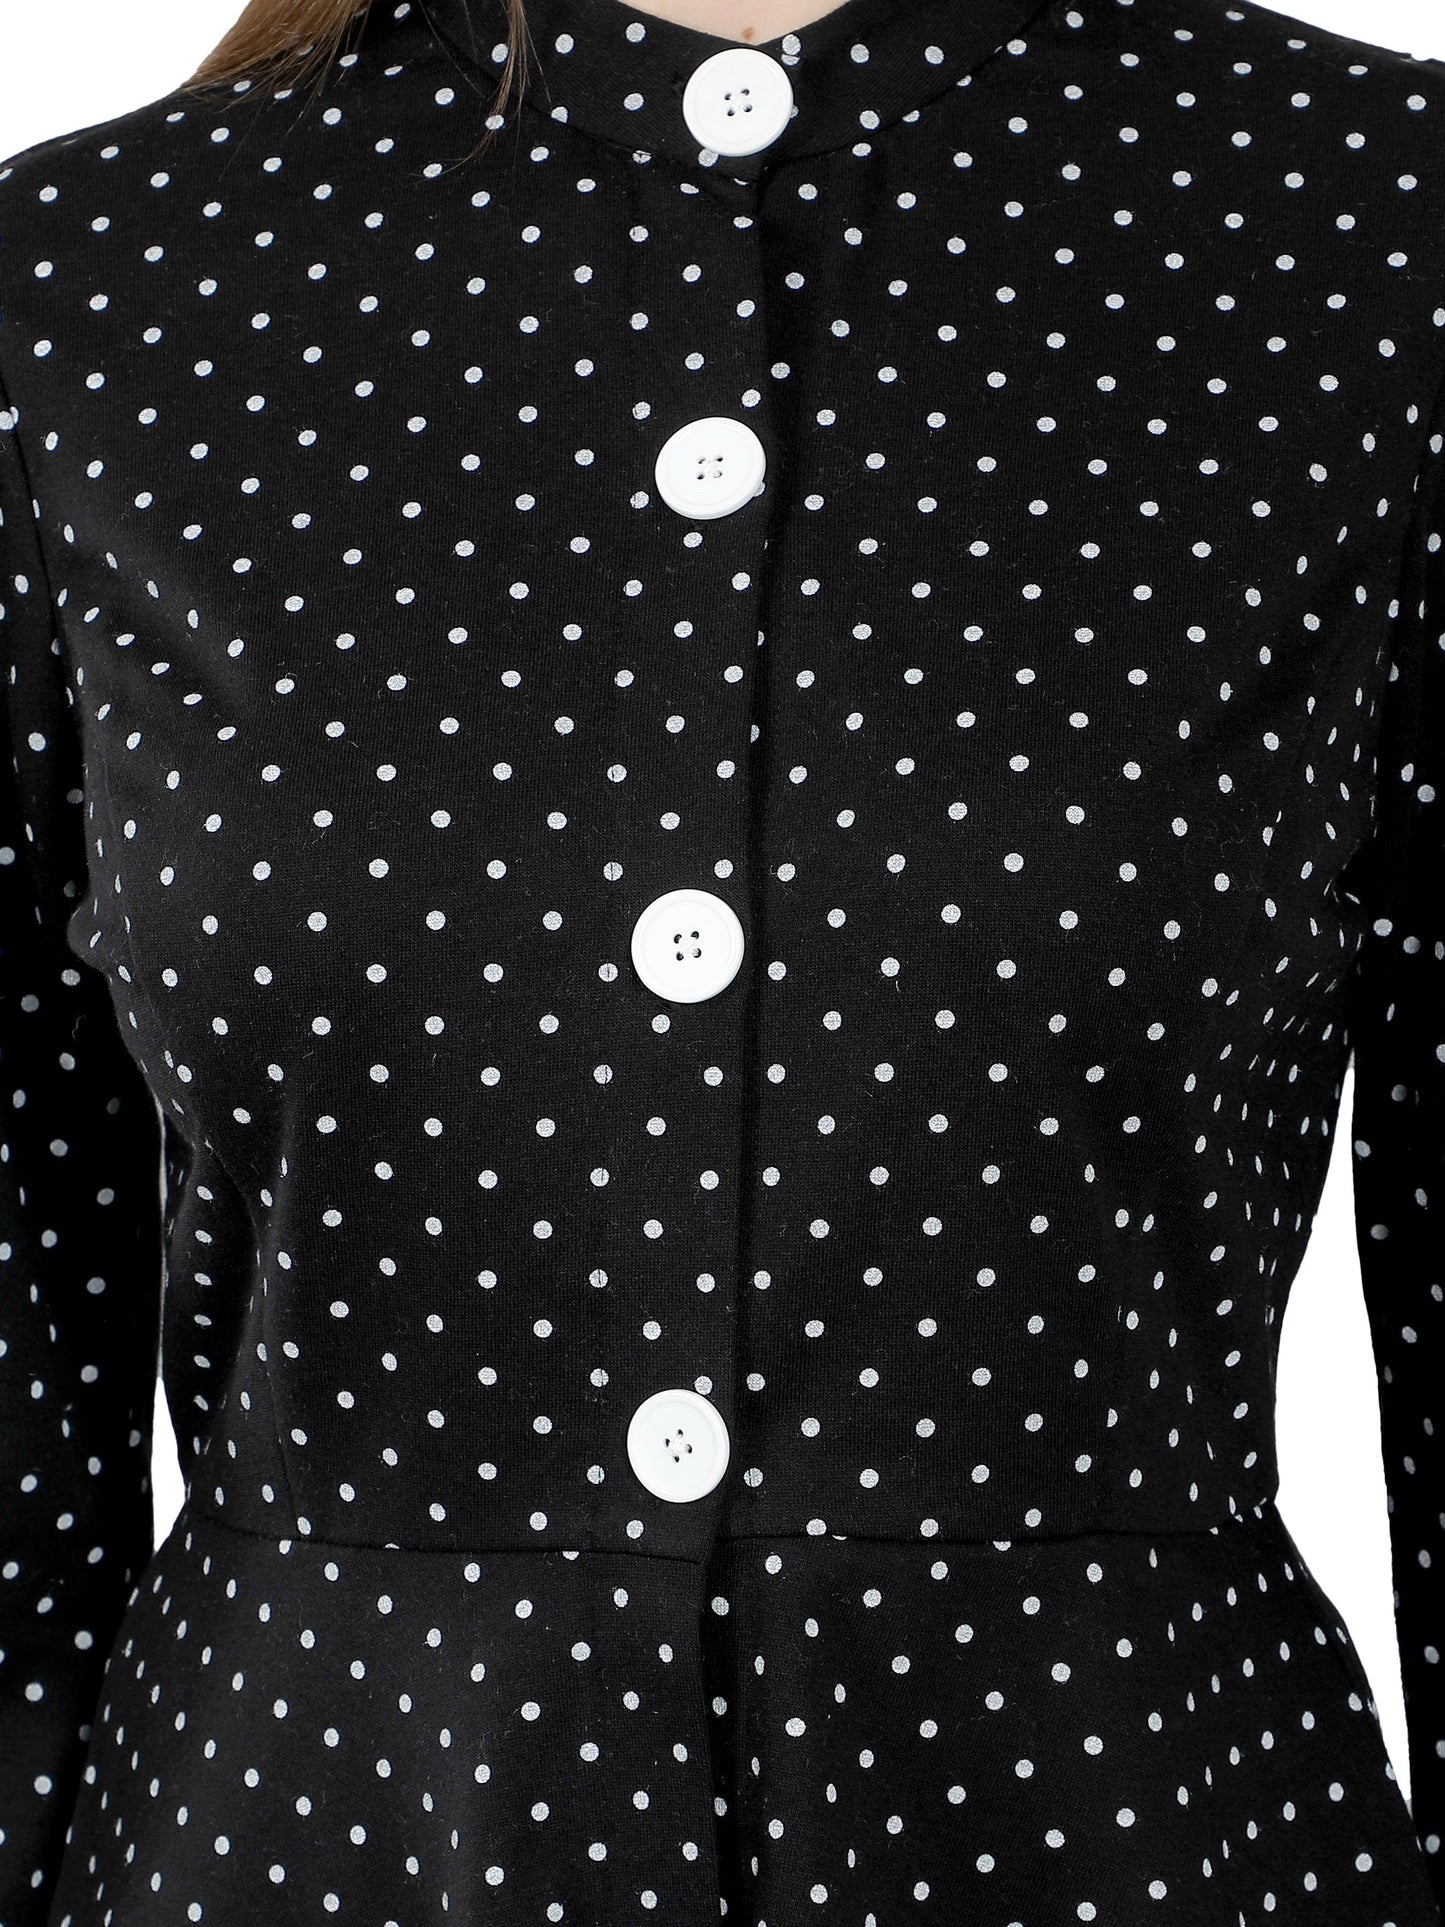 NUEVOSDAMAS Women Polka Dot Printed Peplum Jacket-Black